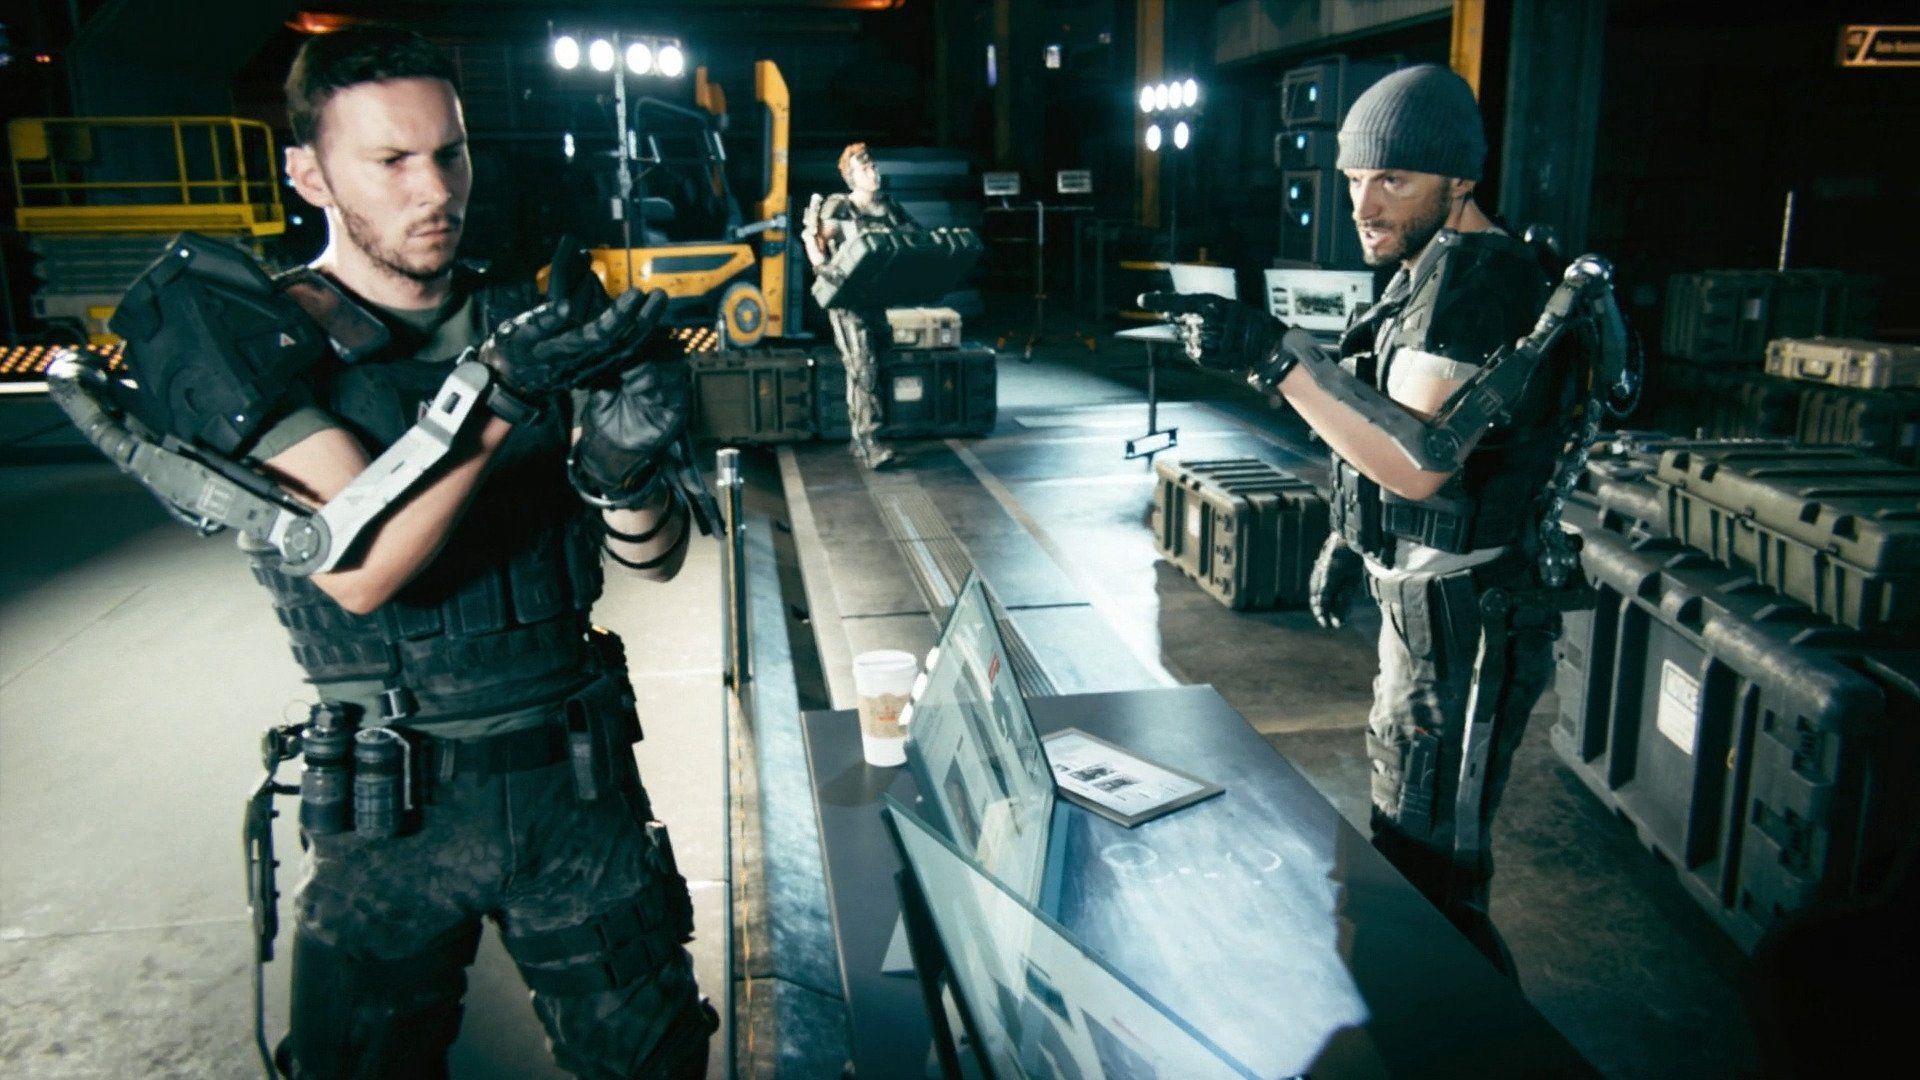 Jack Mitchell of Duty: Advanced Warfare #CallofDuty